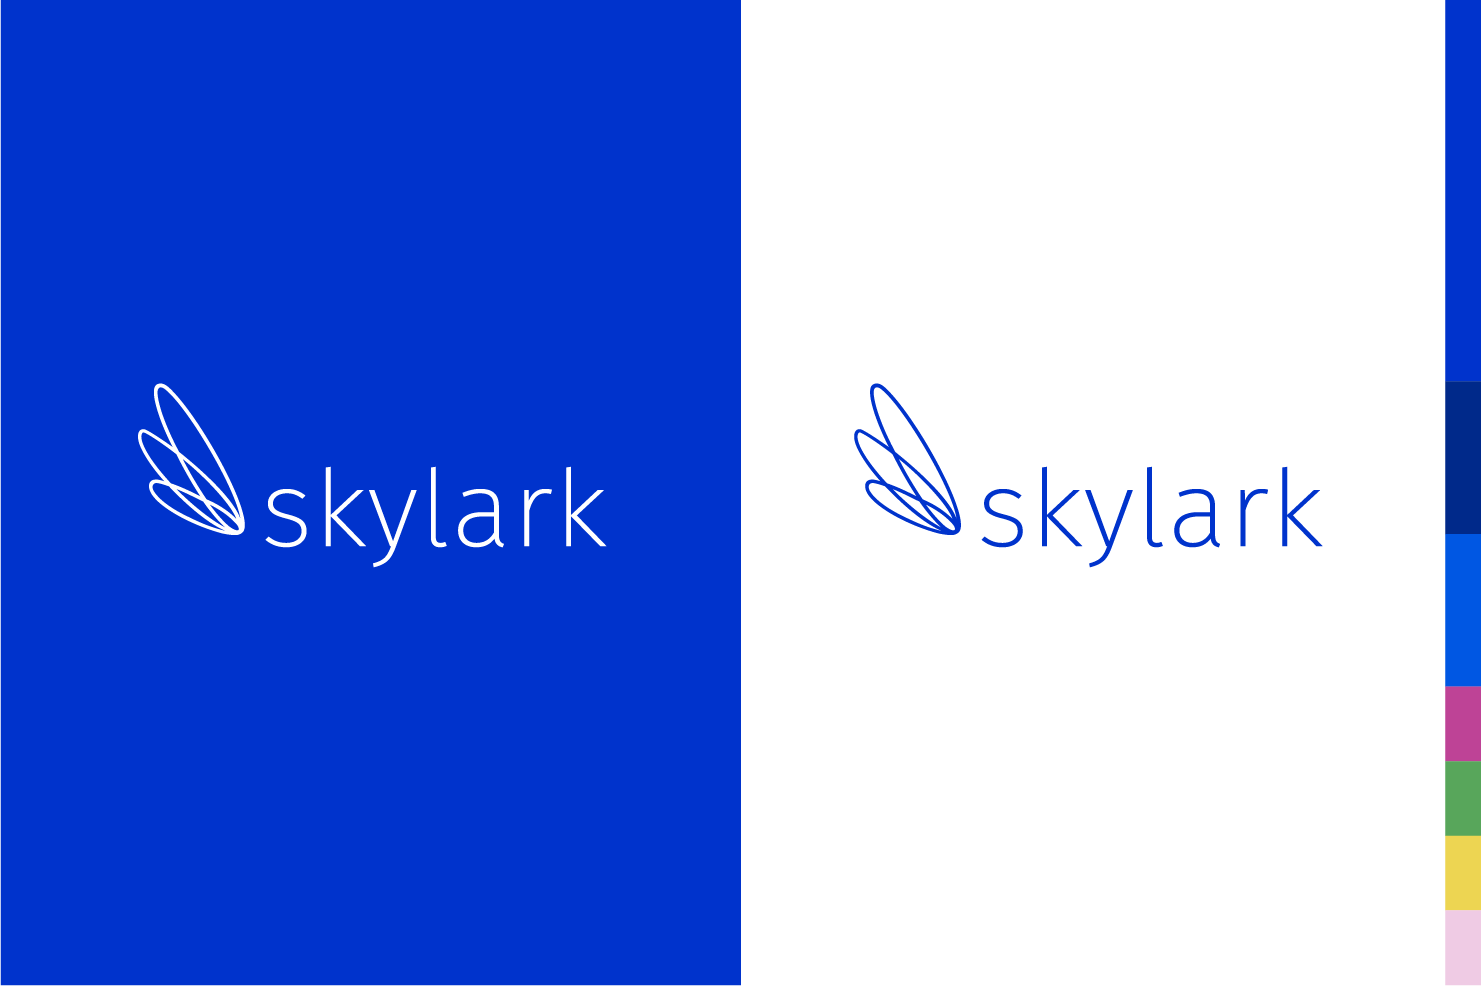 The Skylark Resources, LLC. logo and color palette